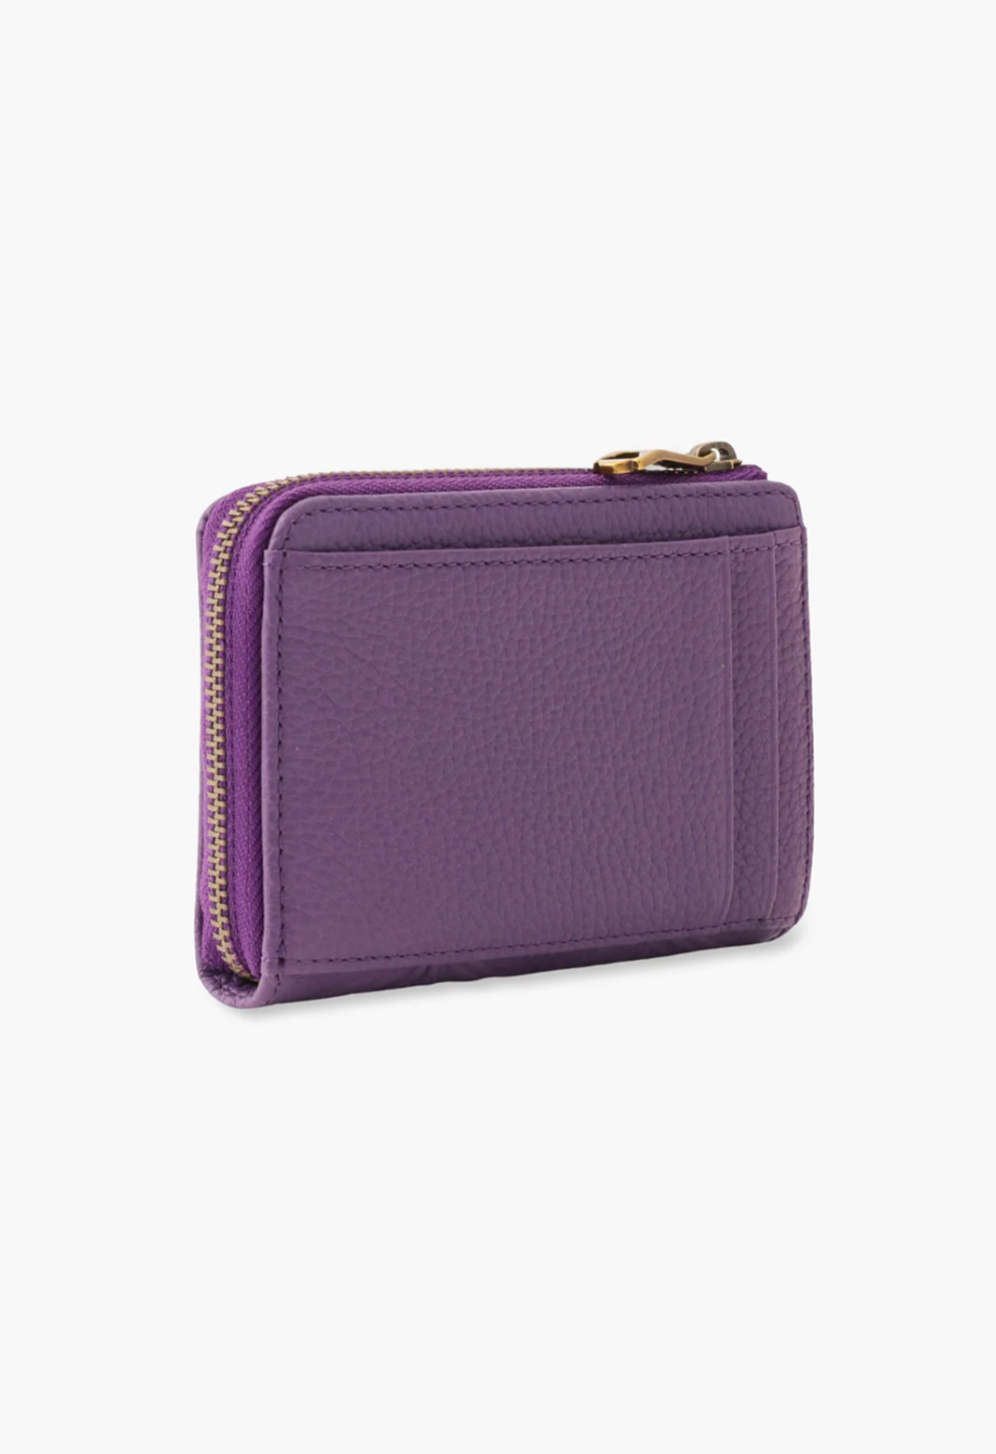 Nova Small Wallet purple Mini matte leather wallet, zipper closure, large stiches.